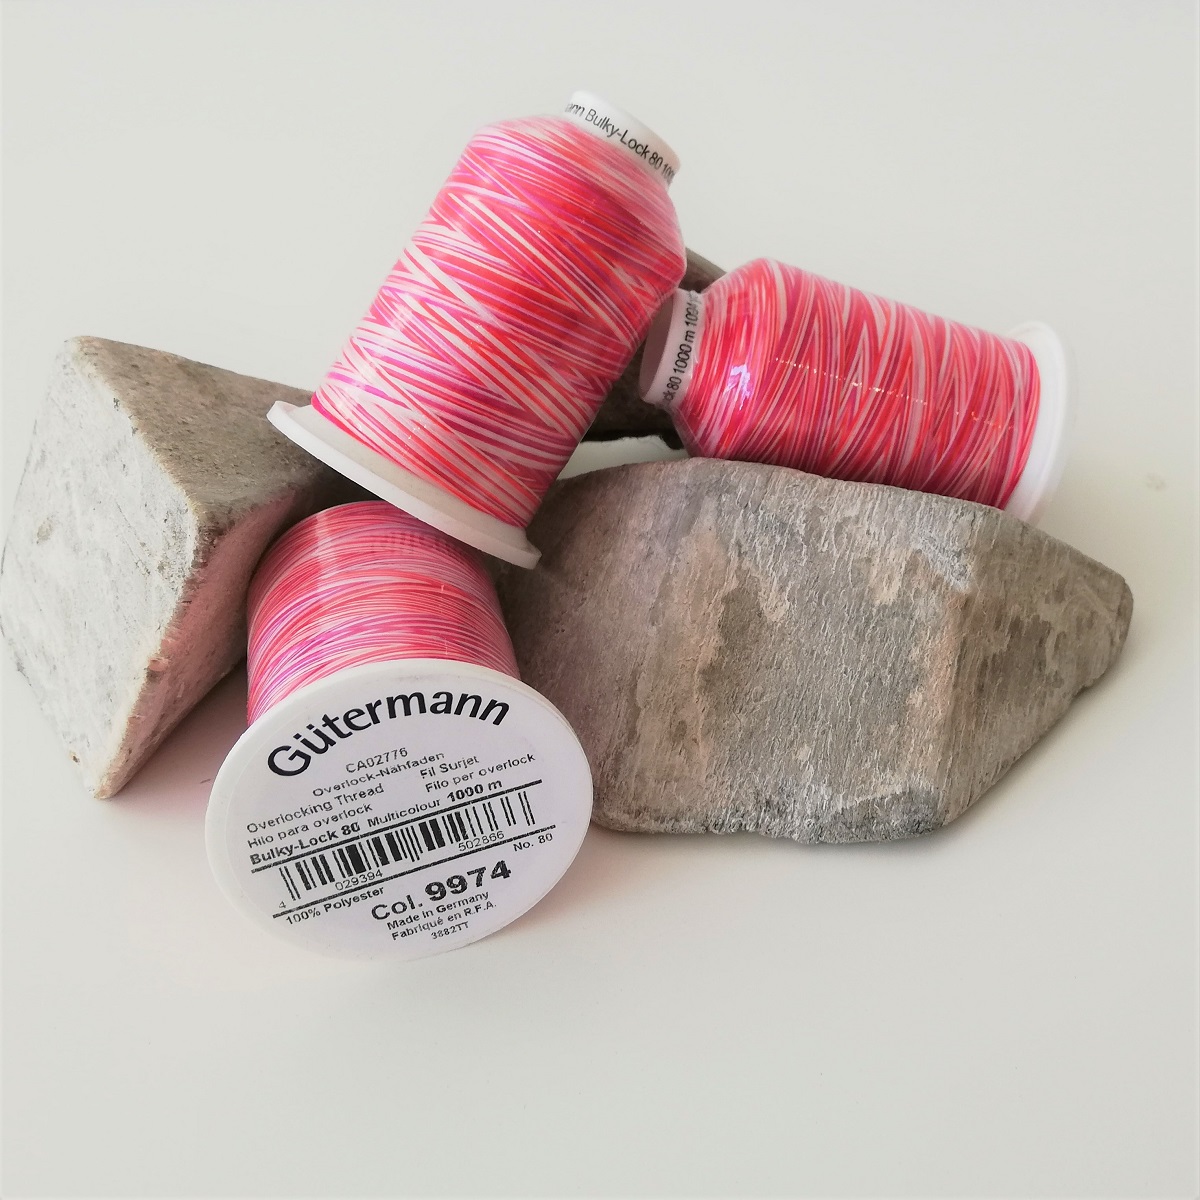 Gütermann Bauschgarn Bulky-Lock 80 Multicolor "pink rose" 9974, 1000m